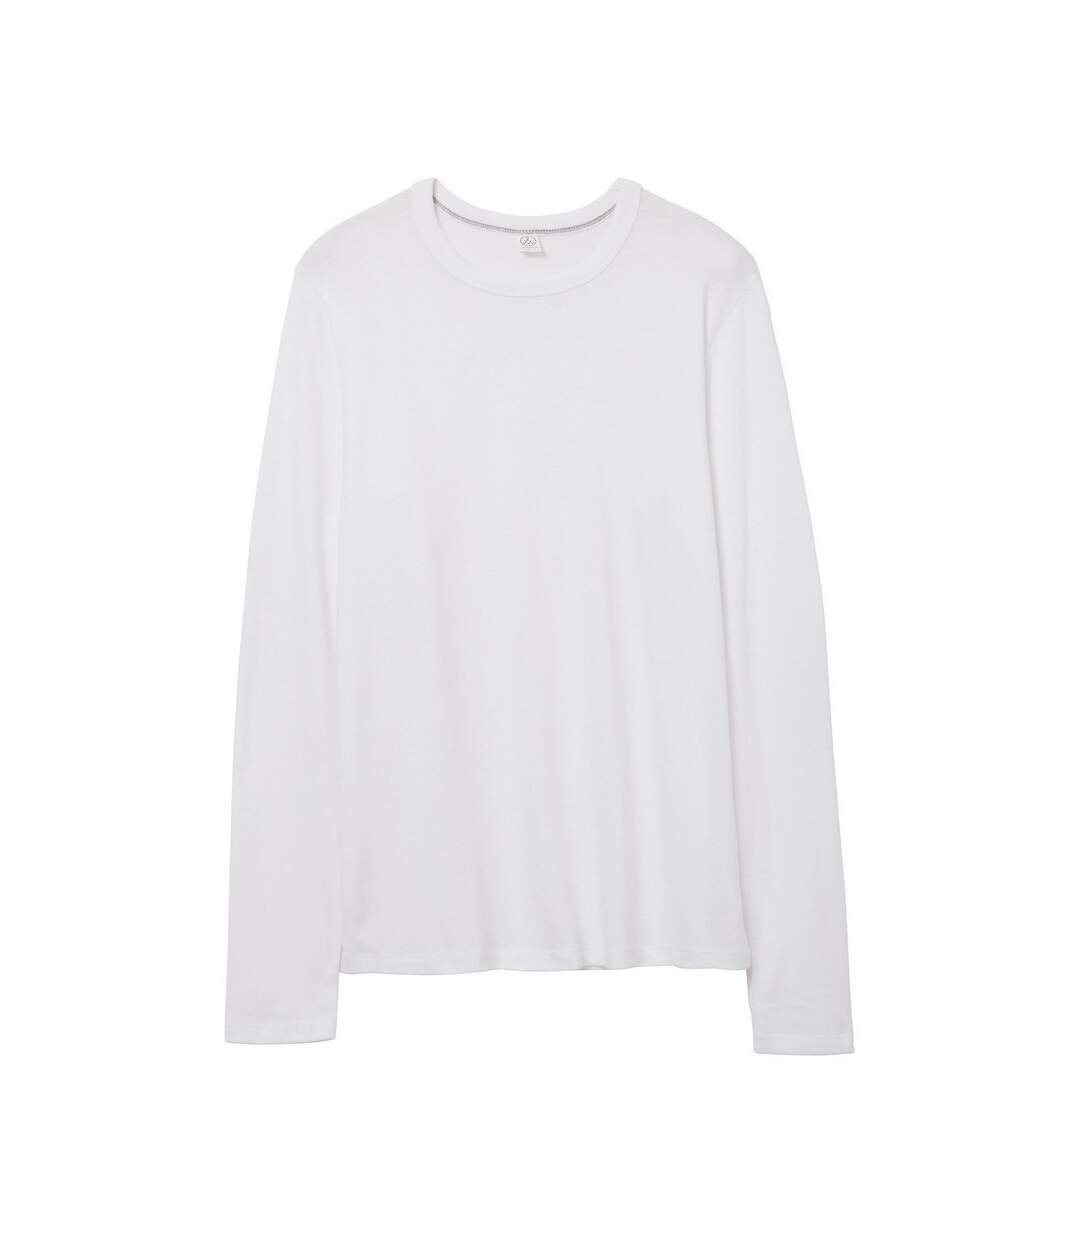 Alternative Apparel Mens 50/50 Keeper Long Sleeve T-Shirt (White)